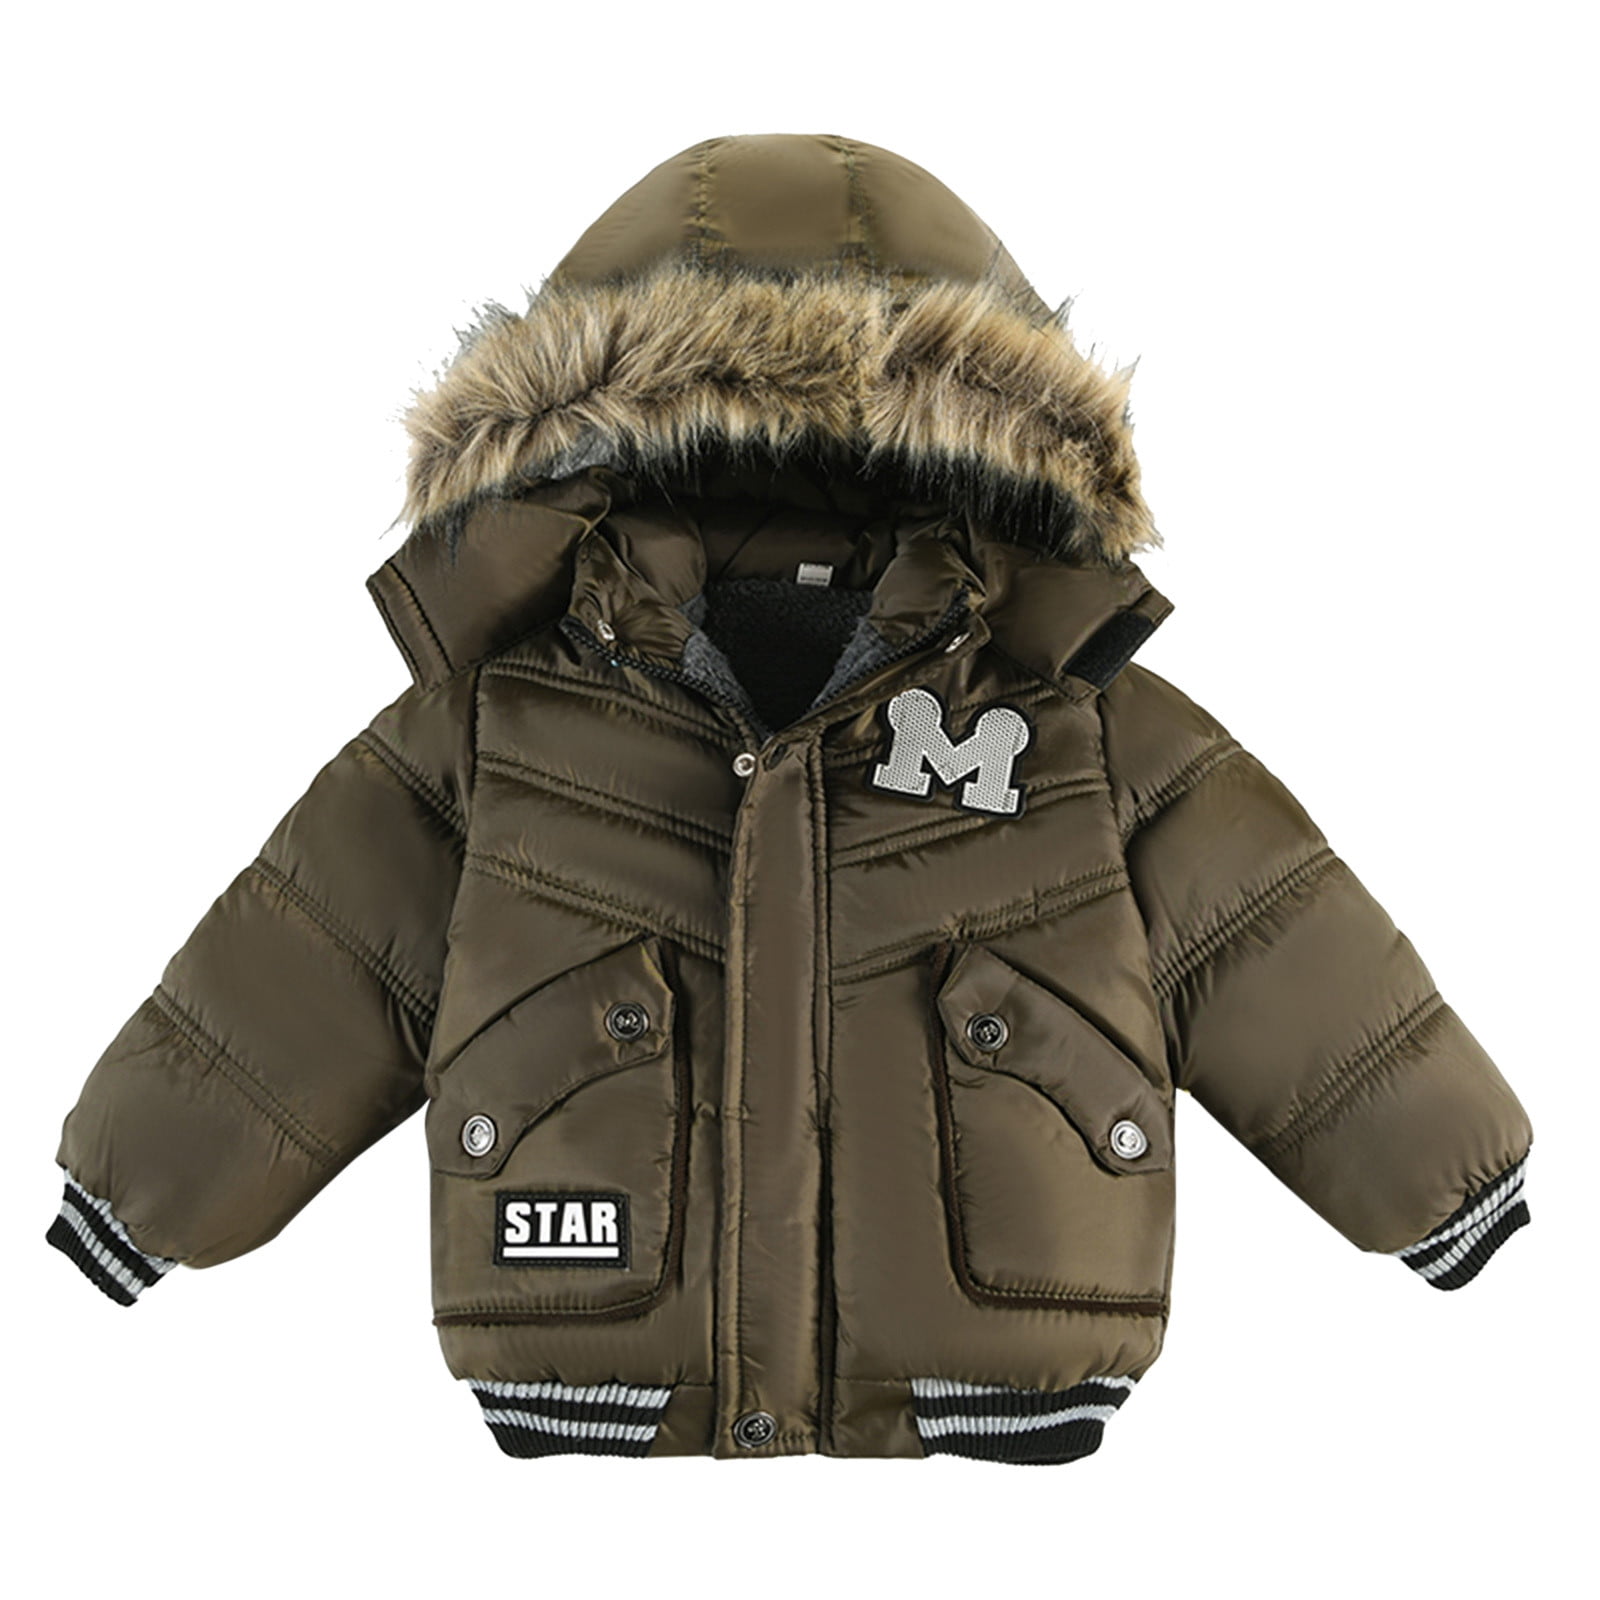 Children Winter Boy Jacket Coat Hooded Coat Fashion Kids Warm Clothes ...